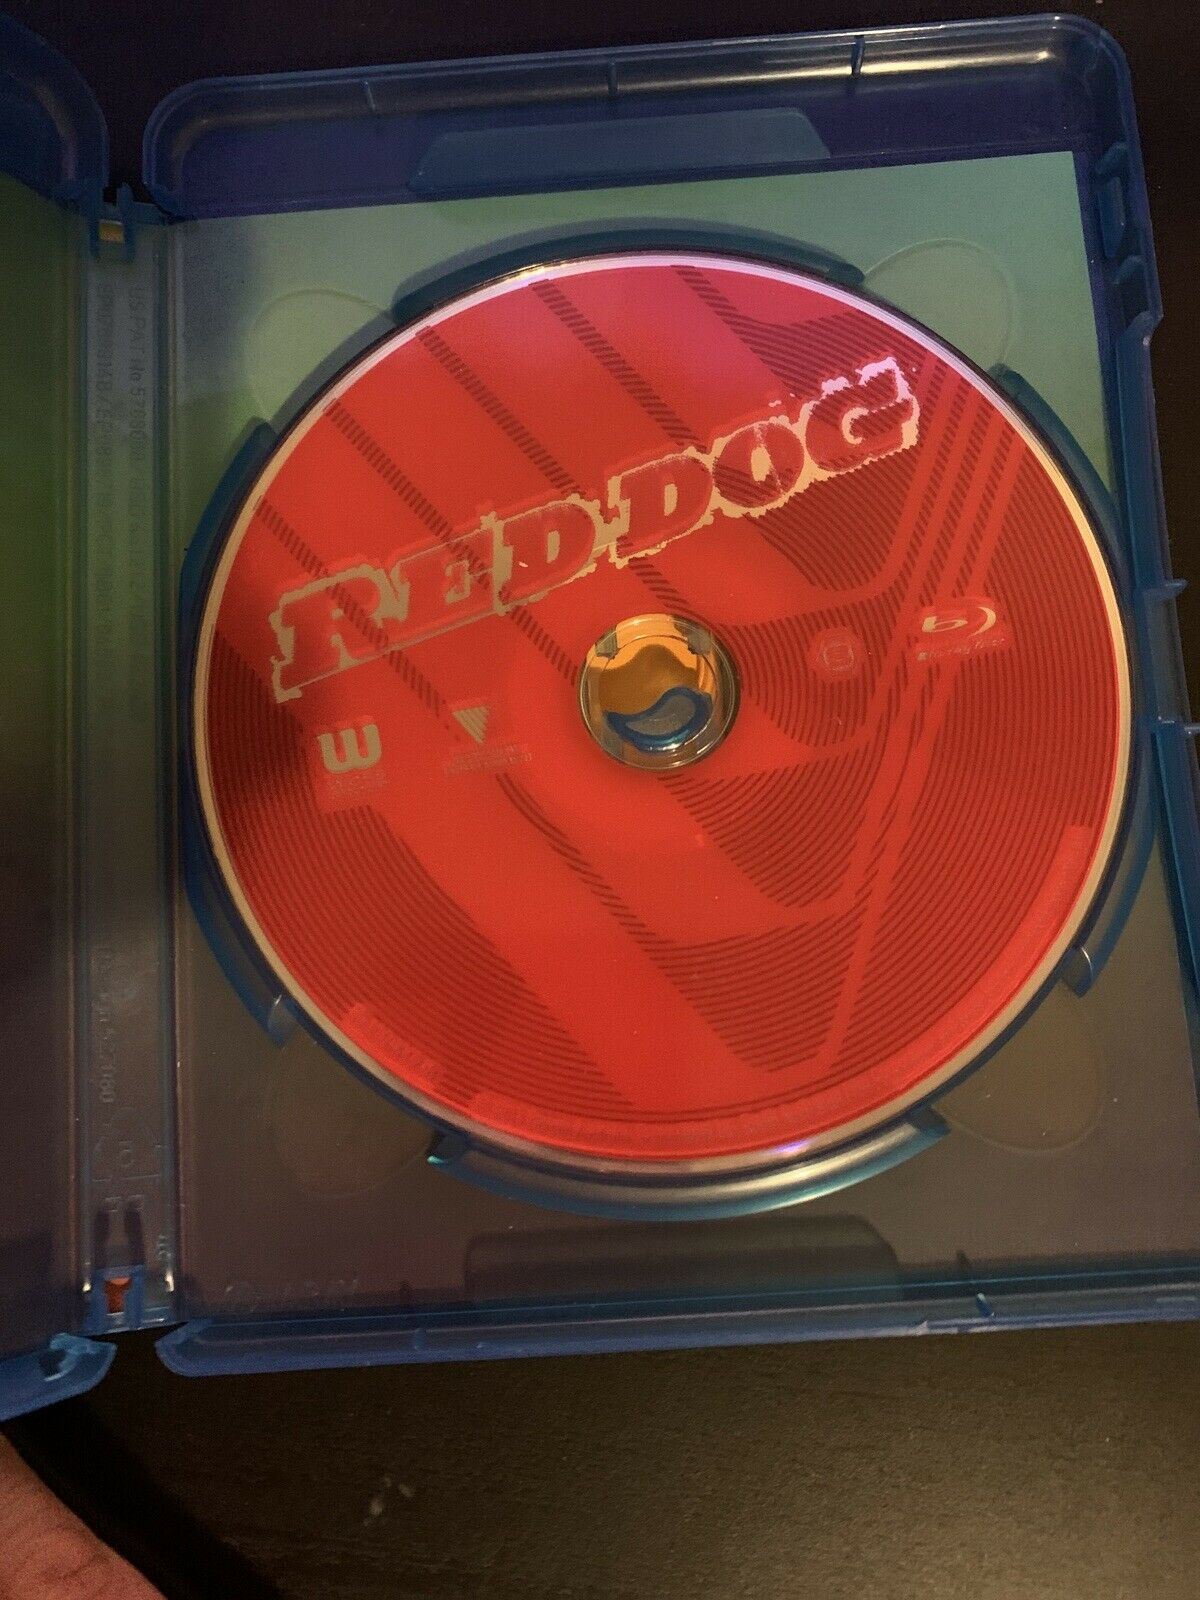 Red Dog (Blu-ray, 2011) Josh Lucas, Rachael Taylor. Aussie True Story. Region B